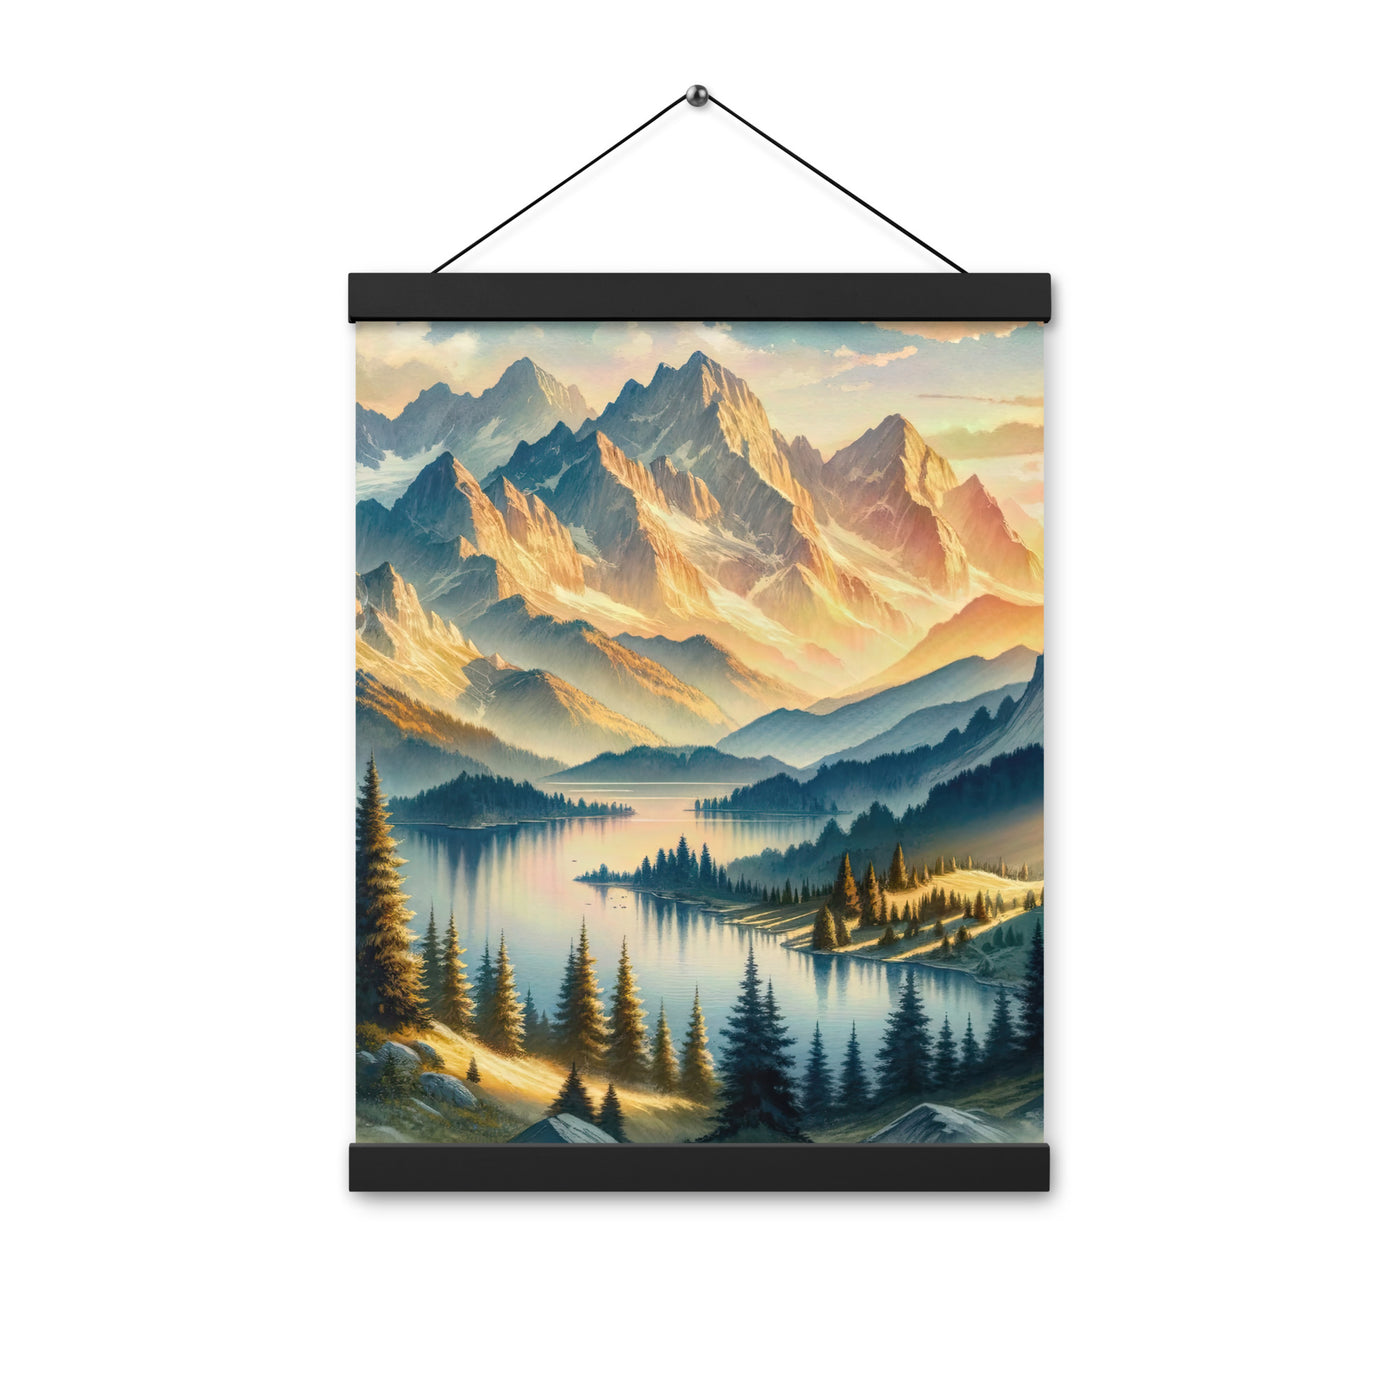 Aquarell der Alpenpracht bei Sonnenuntergang, Berge im goldenen Licht - Premium Poster mit Aufhängung berge xxx yyy zzz 30.5 x 40.6 cm